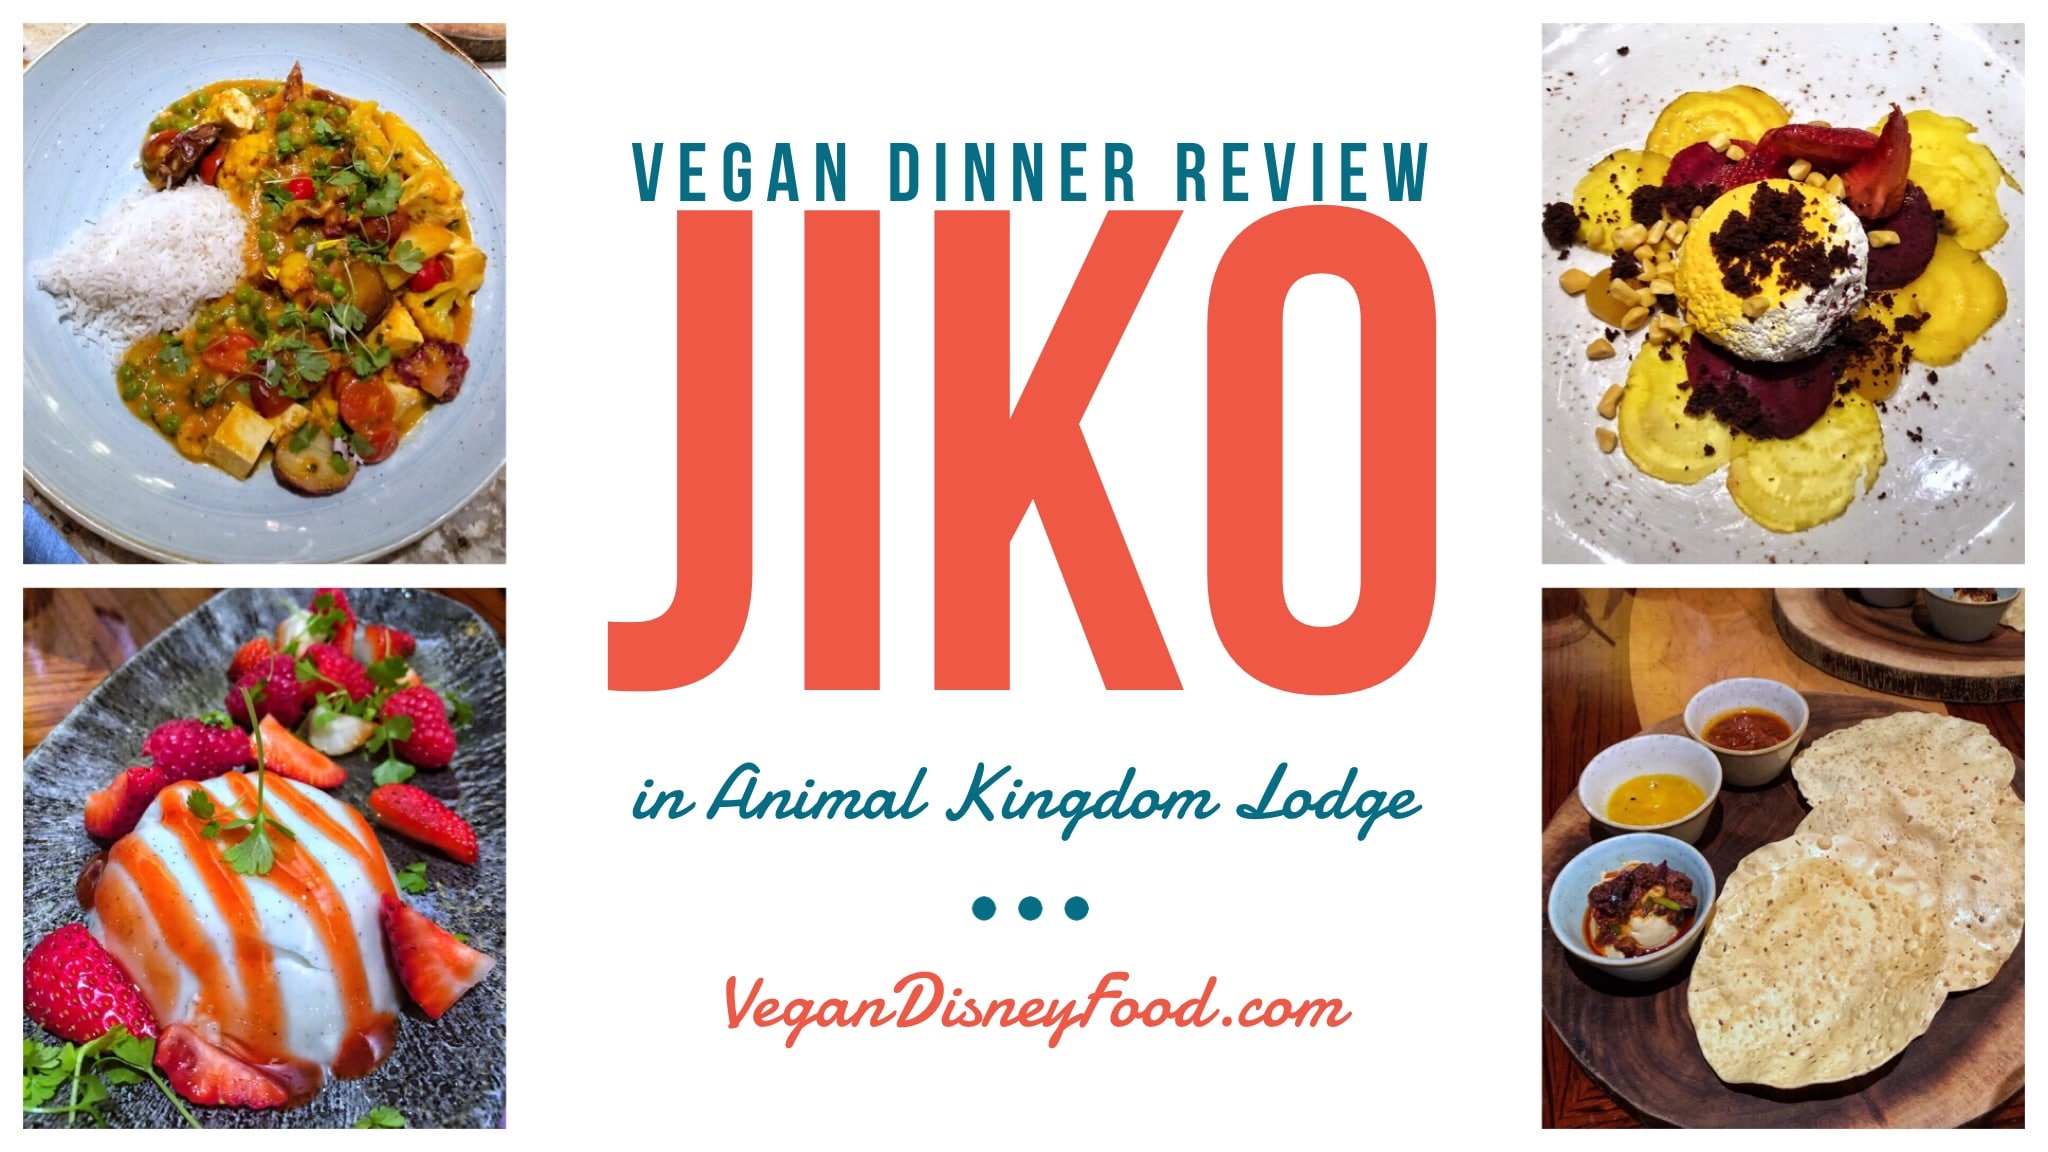 Vegan Dinner Review of Jiko at Animal Kingdom Lodge in Walt Disney World